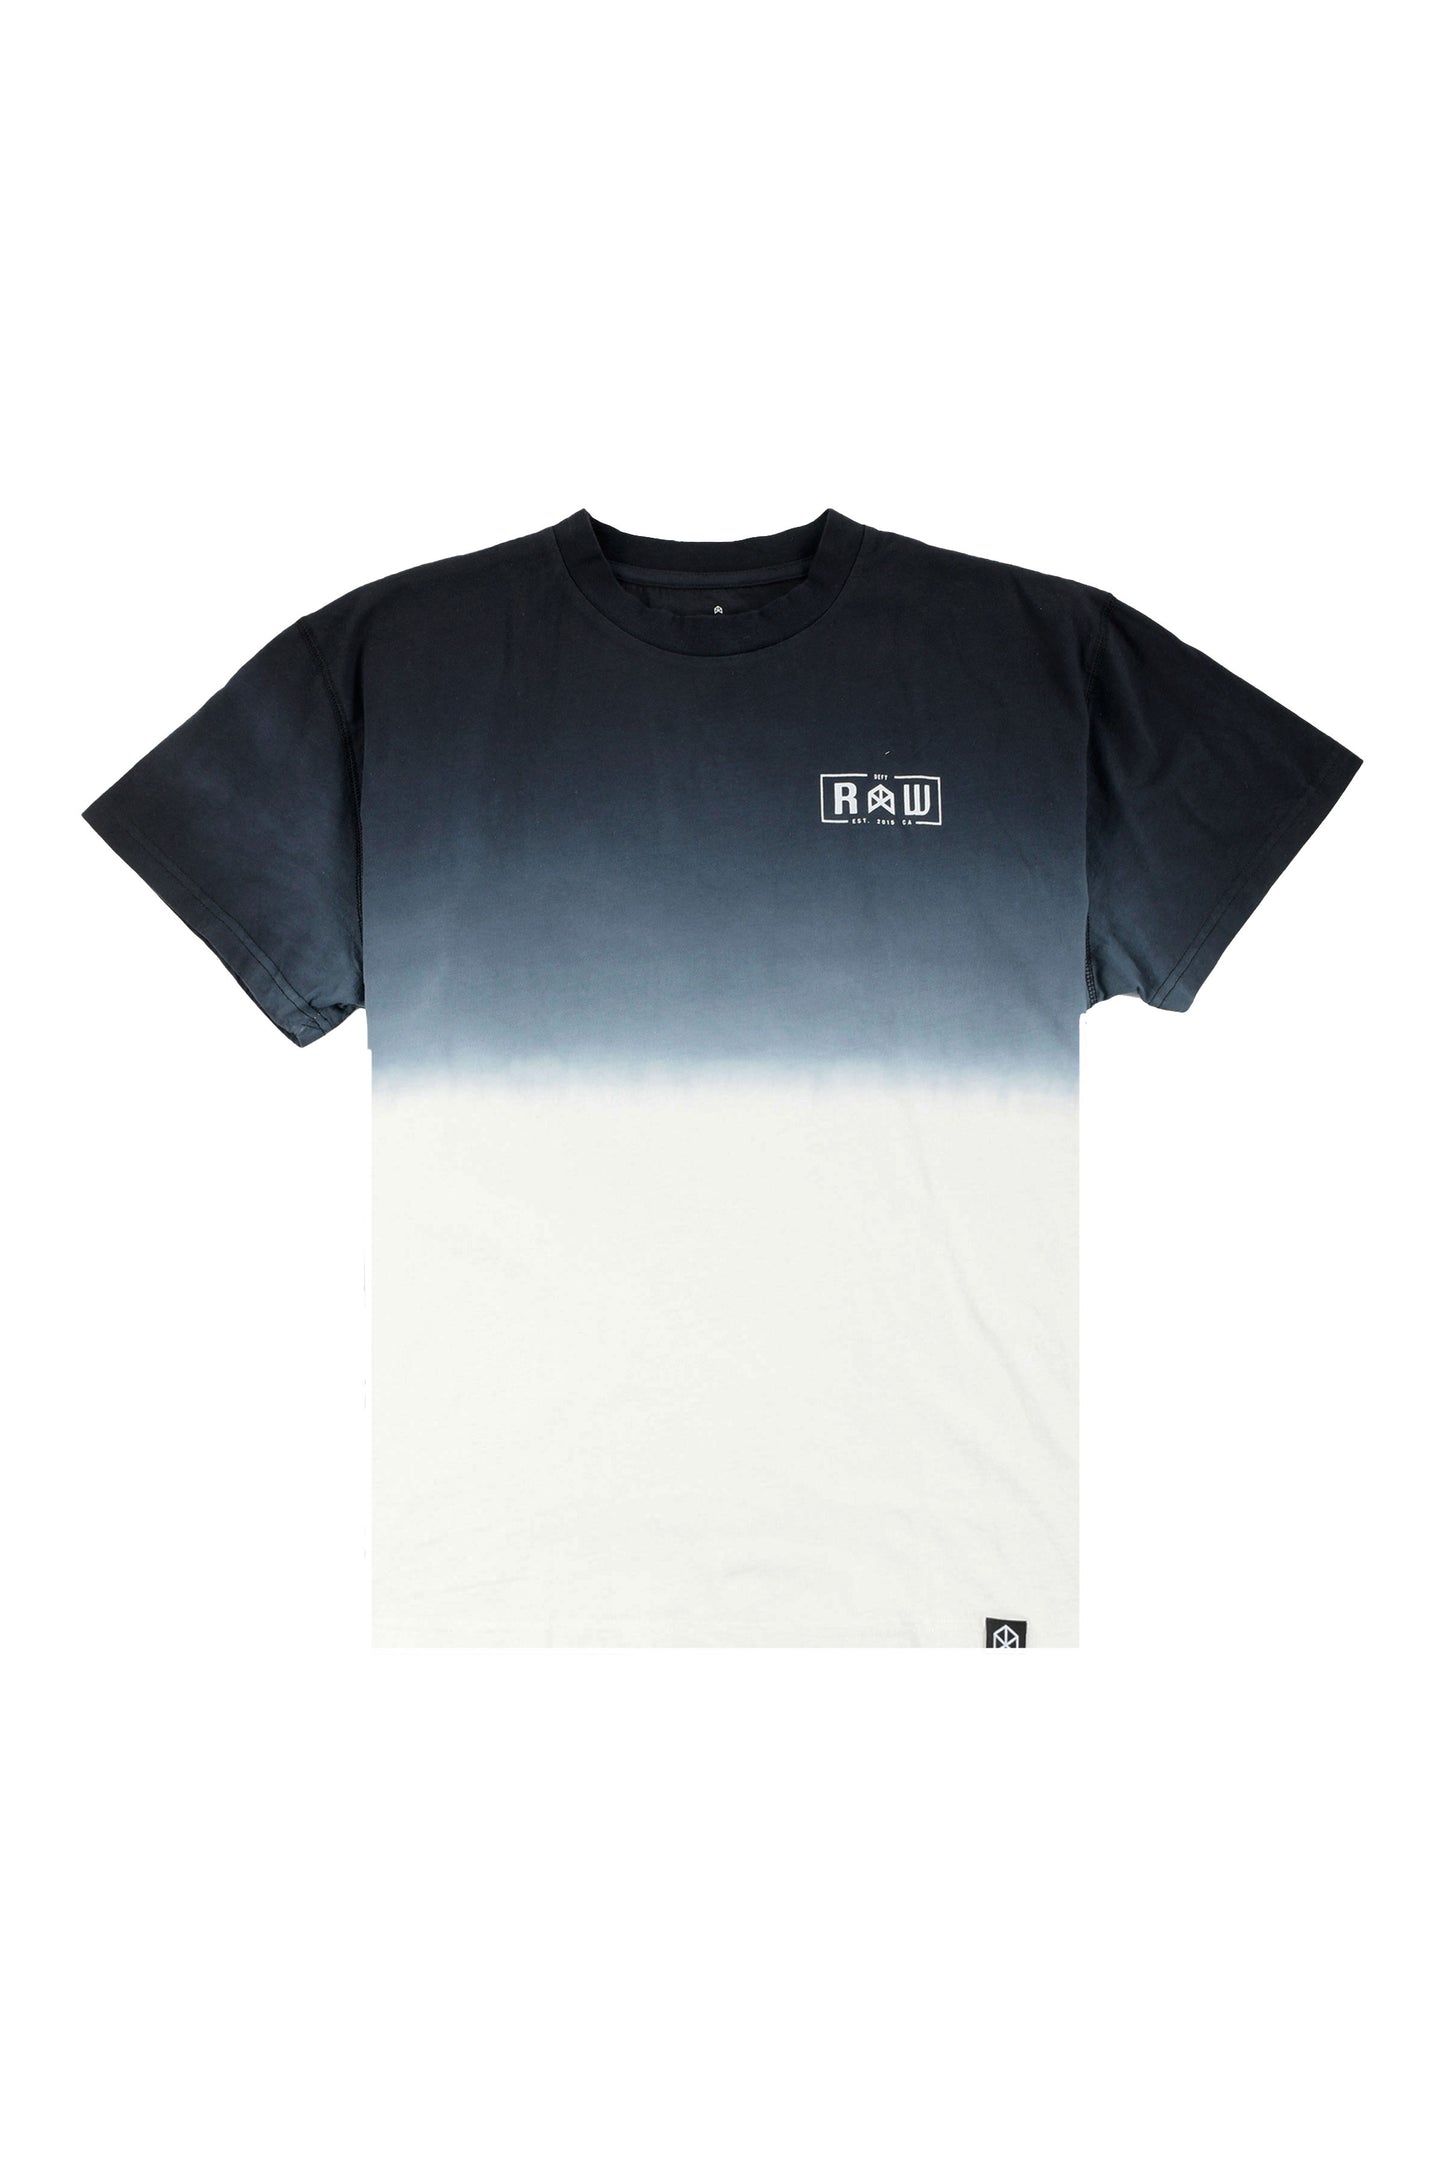 Rawgear Dip Dye T-shirt - RG439